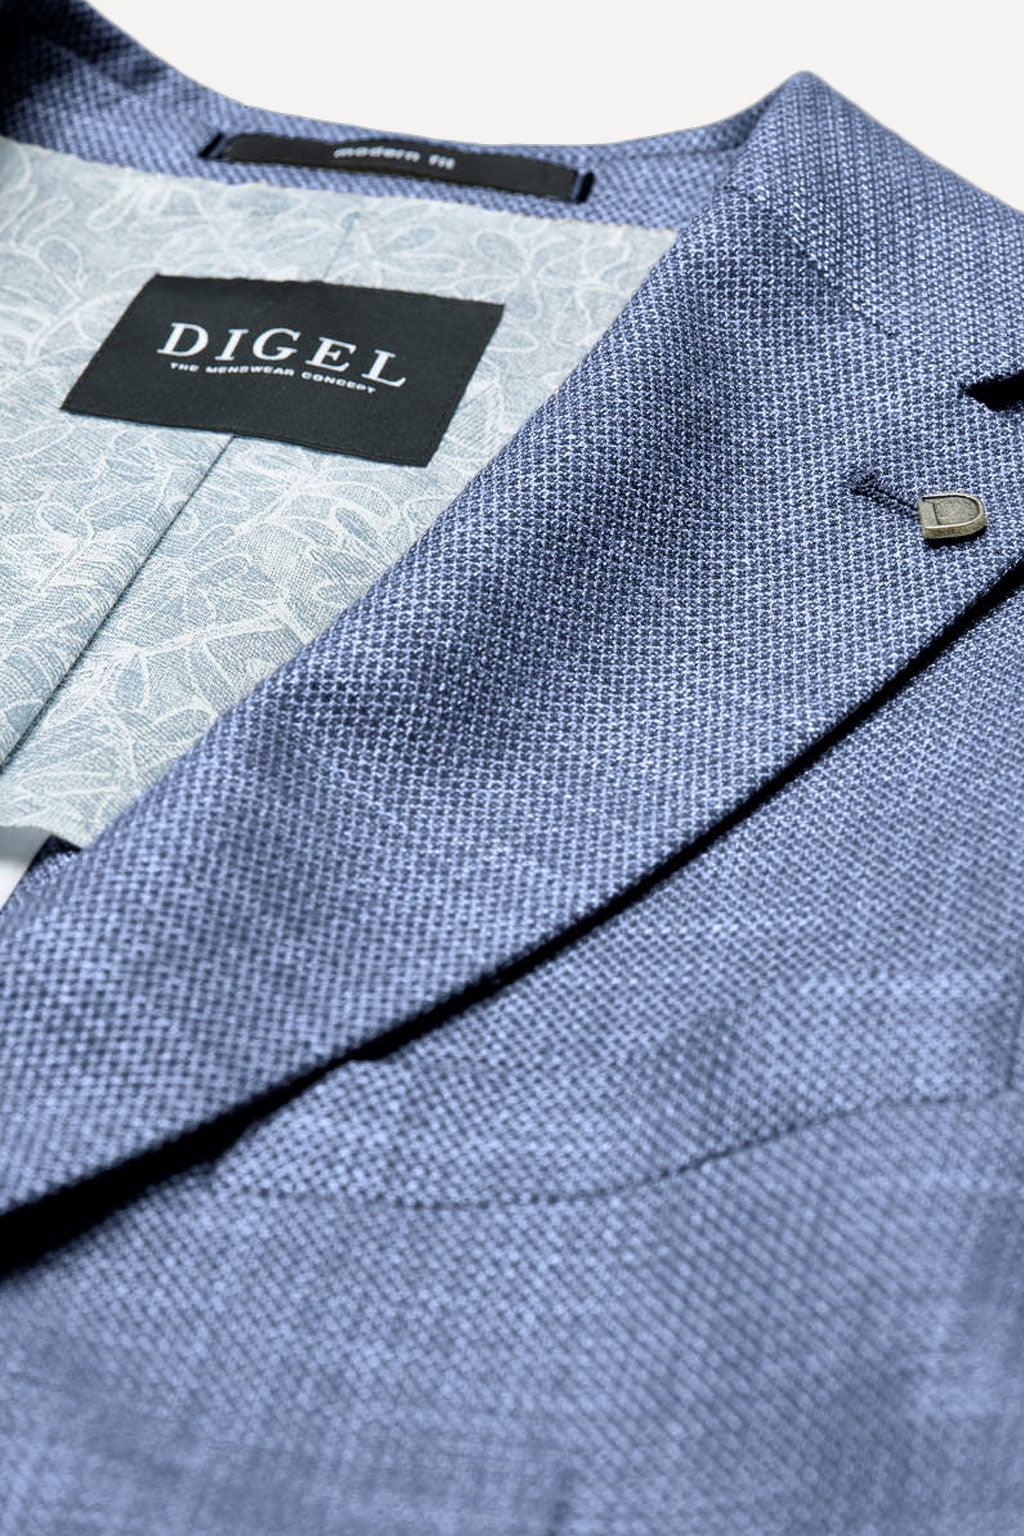 Digel blazer | Big Boss | the menswear concept